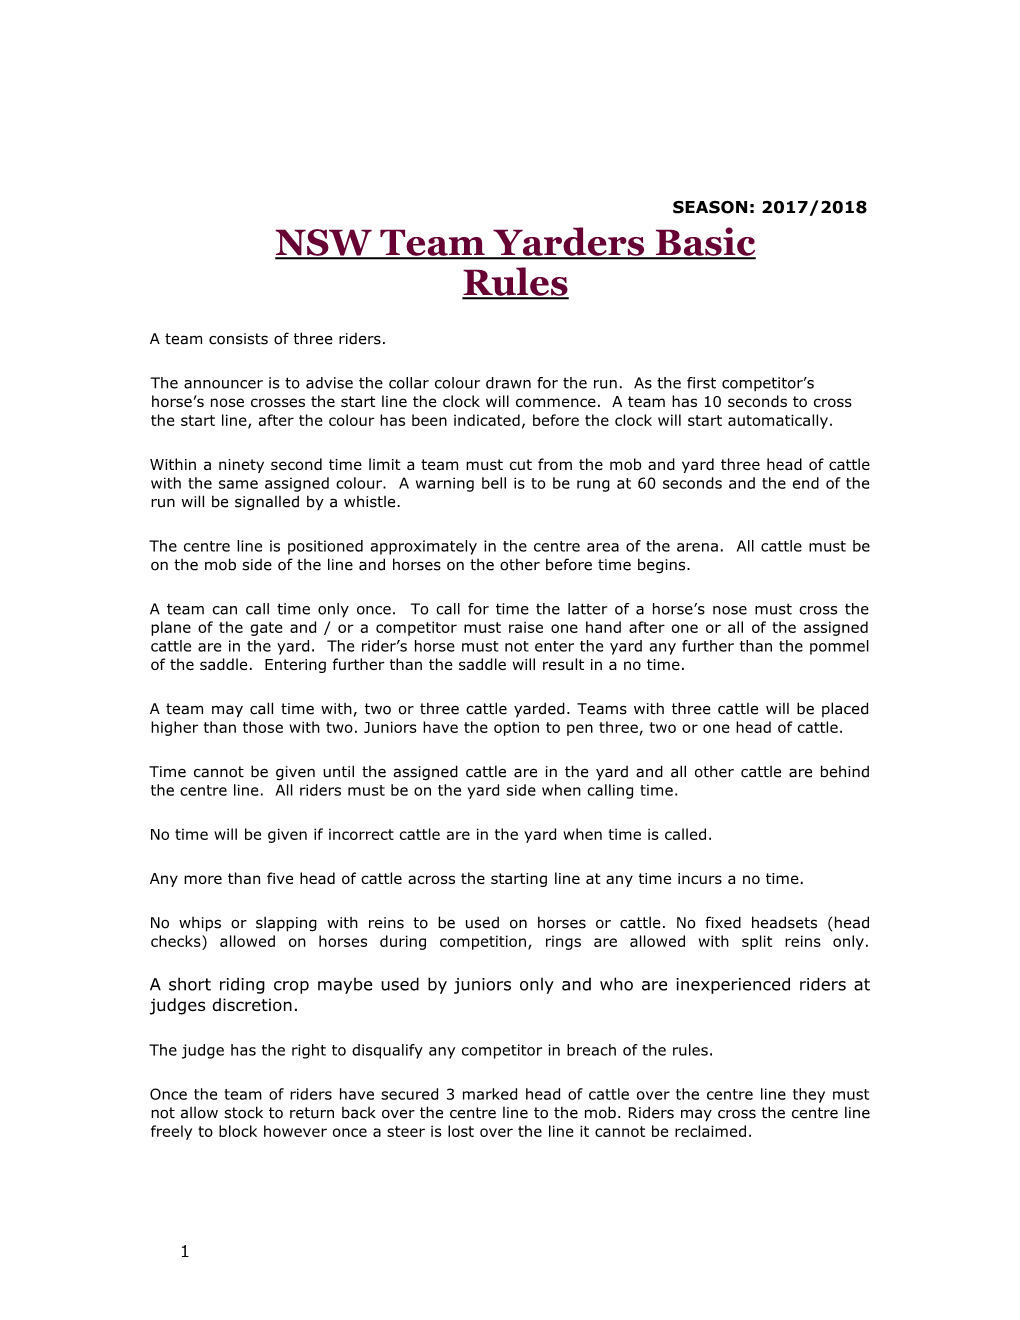 NSW Team Yarders Basic Rules